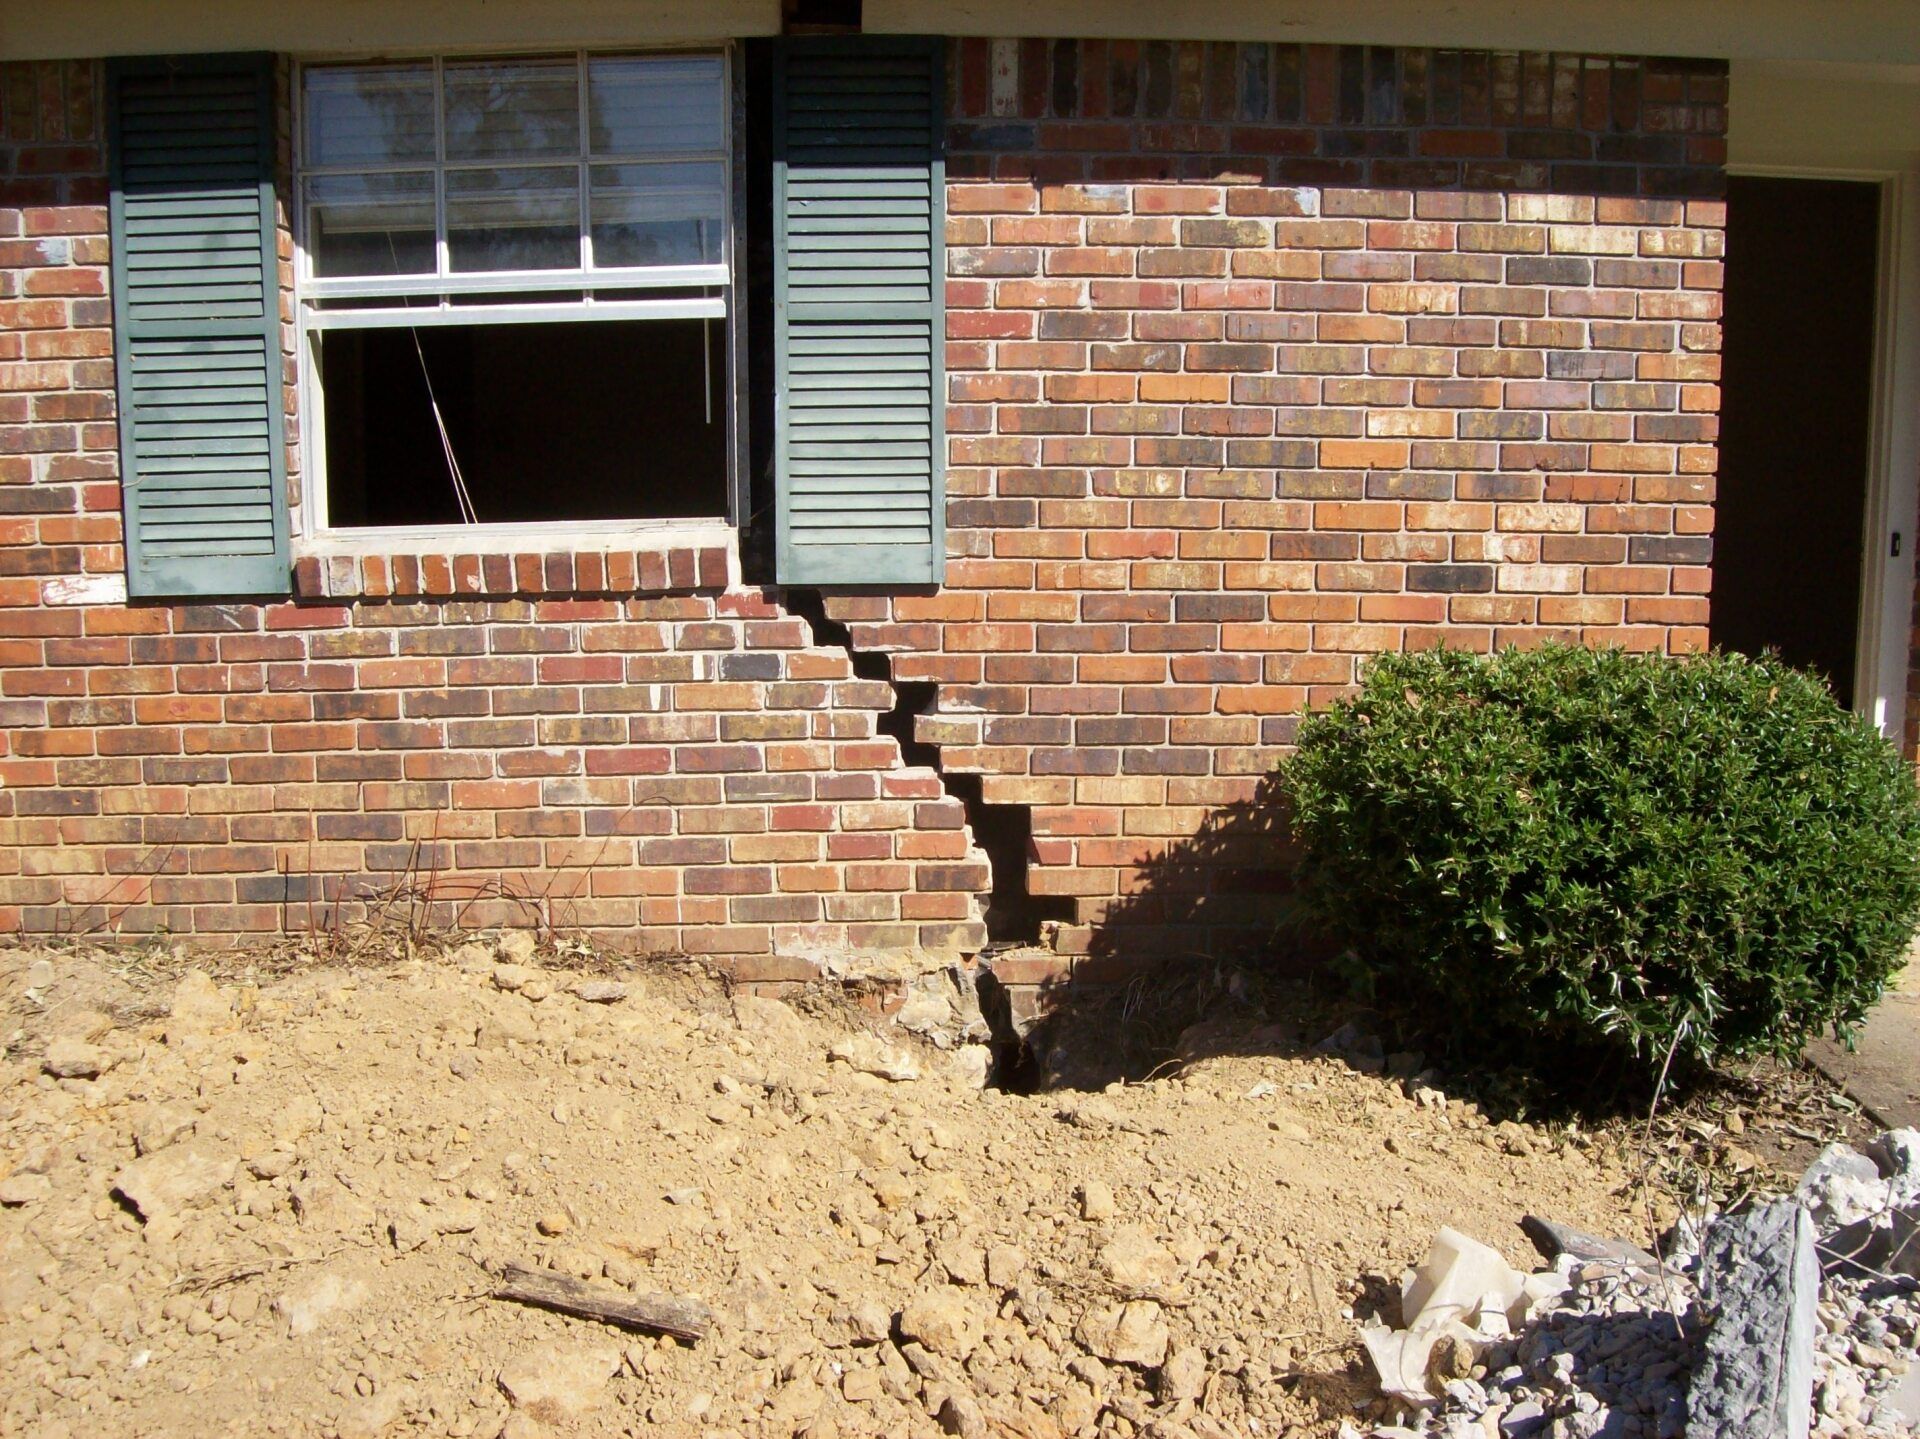 Foundation repair model for a home in Virginia Beach